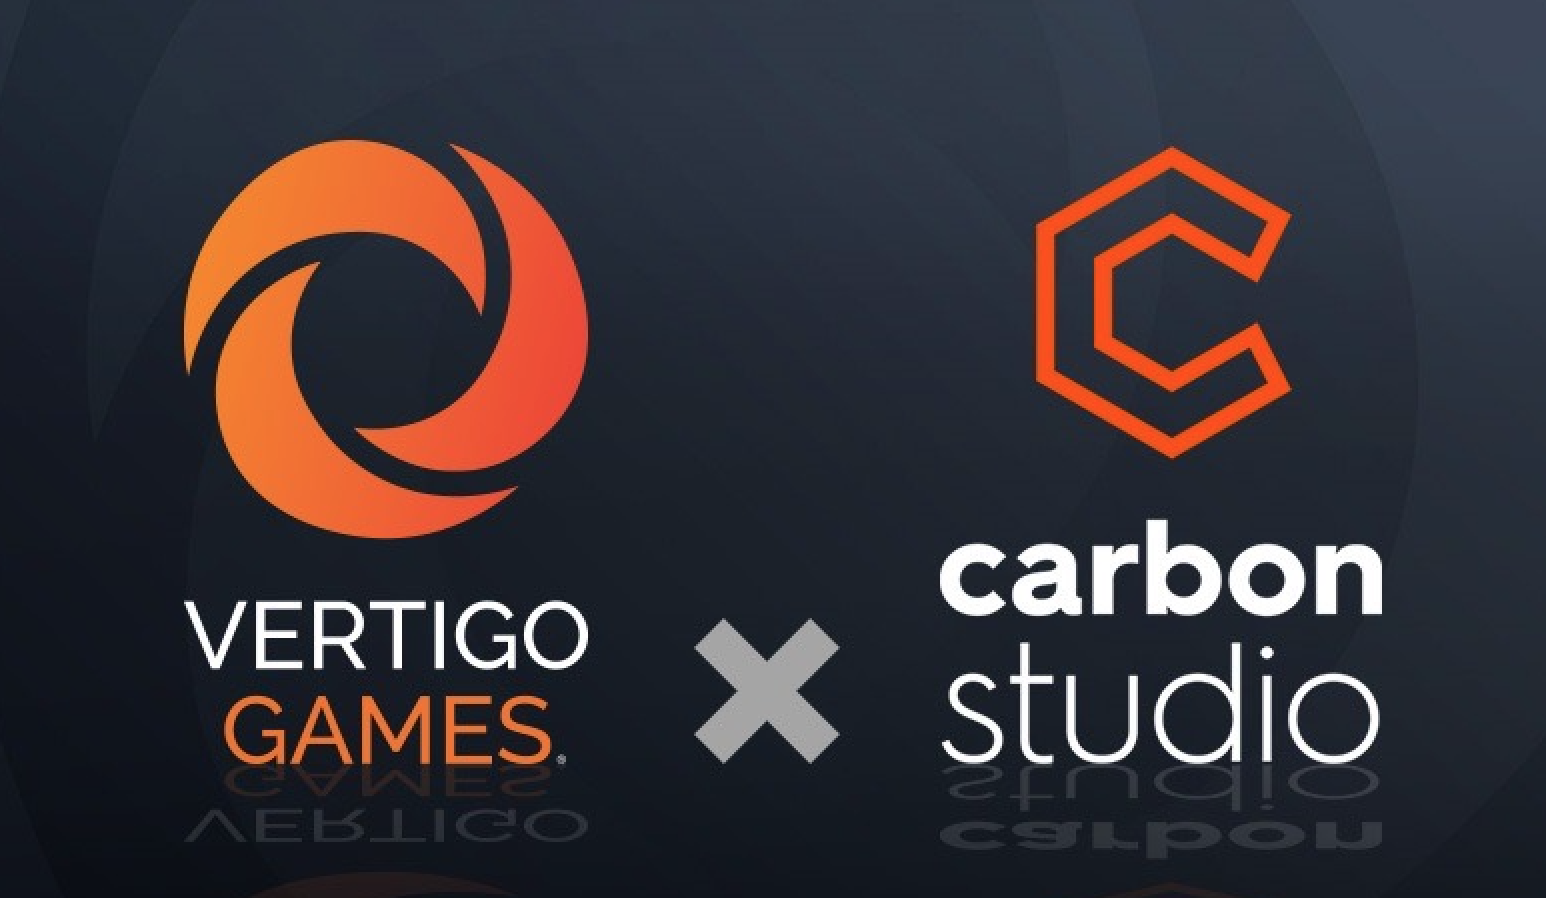 Vertigo Games与Carbon Studio将有大合作！